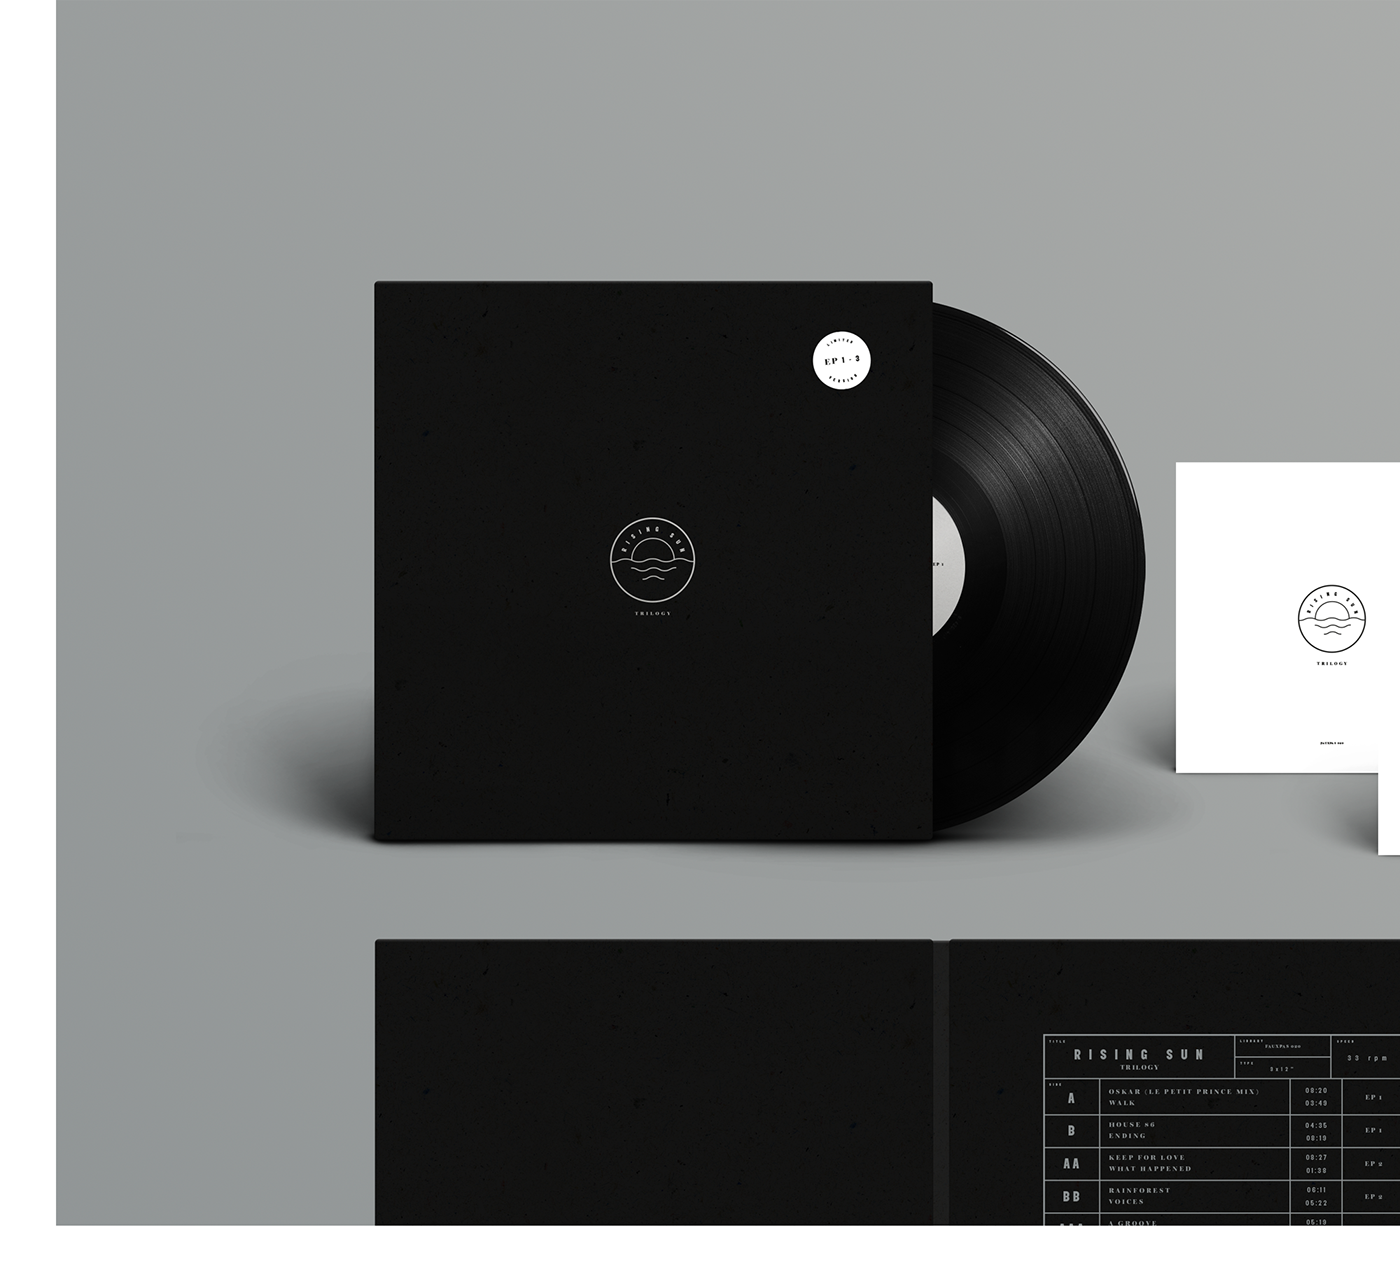 Fauxpas Musik Gatefold silver black Sun ep limited edition vinyl electronic music Ambient